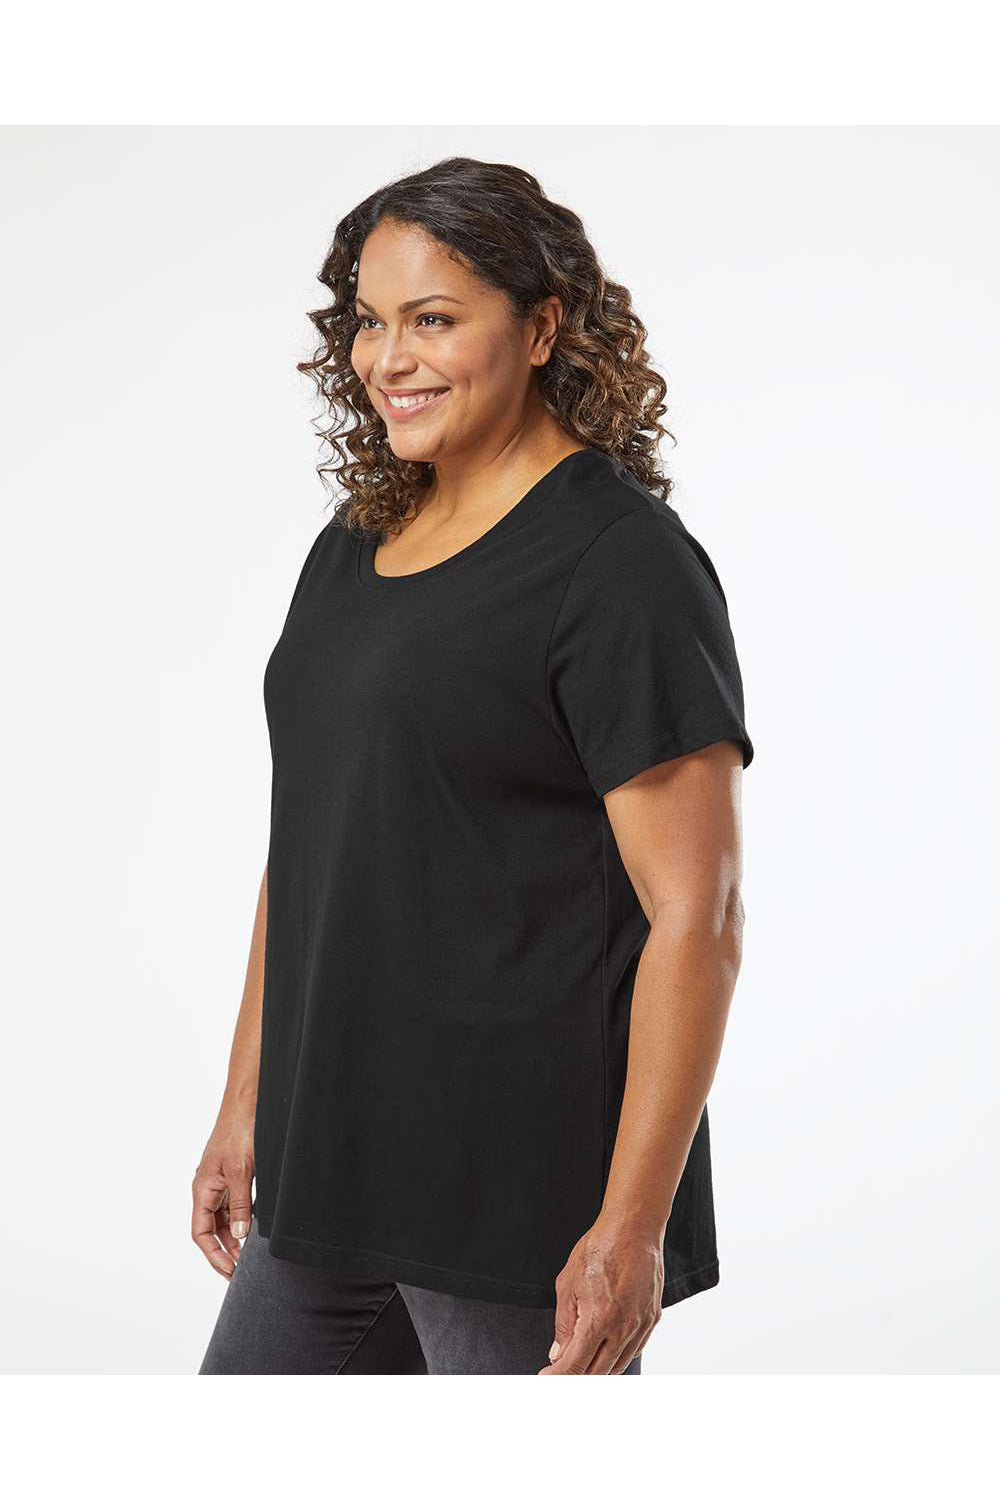 LAT 3816 Womens Curvy Collection Fine Jersey Short Sleeve Crewneck T-Shirt Blended Black Model Side